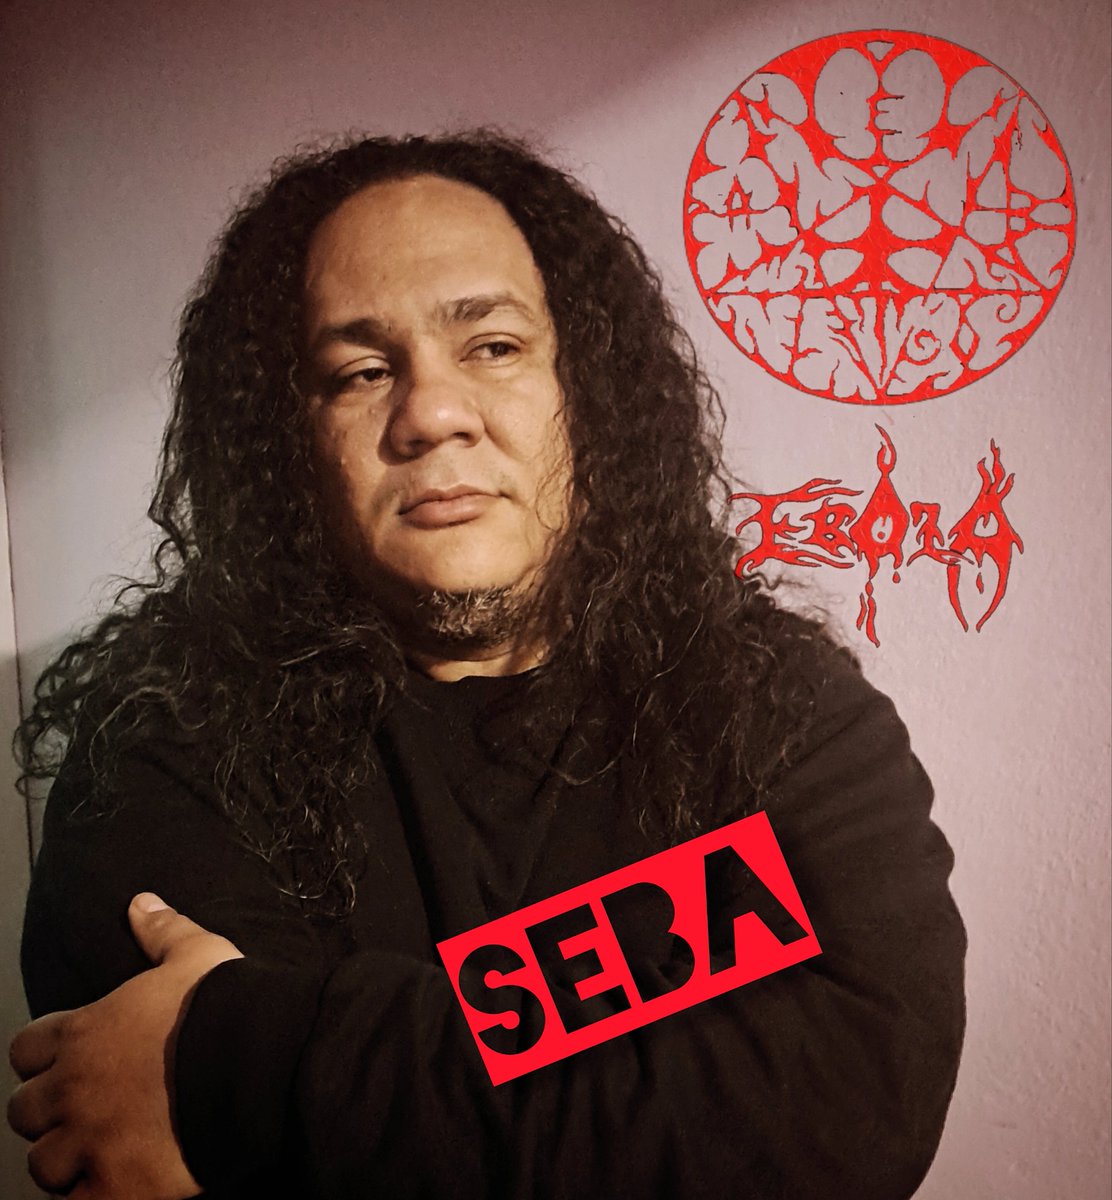 El #infectedsinger SEBA
.
.
.
.
#infectados #metalinfection #metalinfexion #metal #metallml #metaleurope #metalespañol #barcelonametal #metalbarcelona #metalvocalist #cantantedemetal #metallatinoamericano #virusmetal